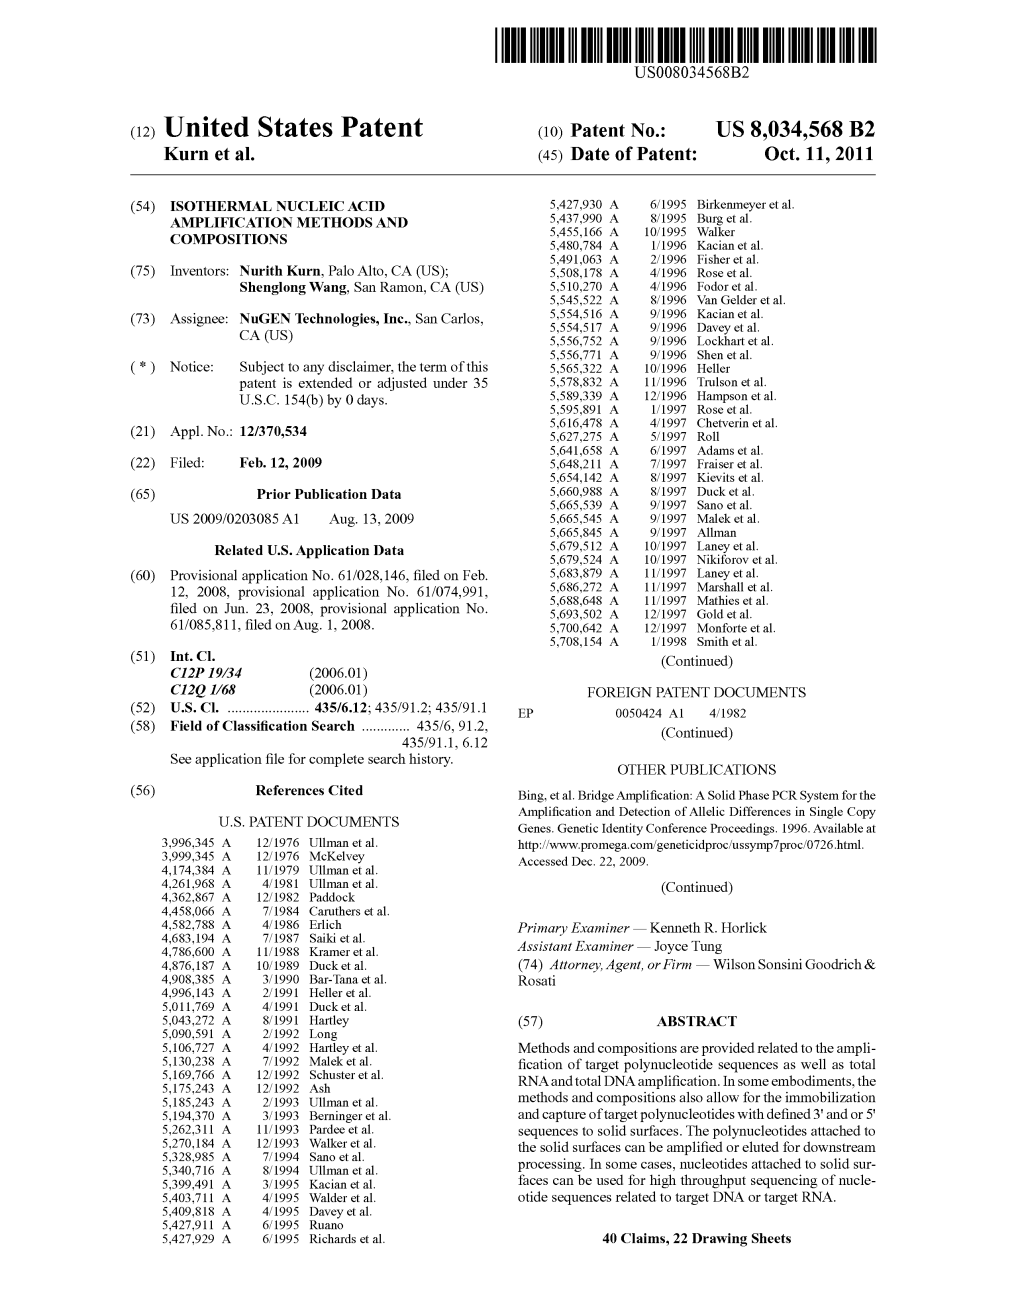 (12) United States Patent (10) Patent No.: US 8,034,568 B2 Kurn Et Al